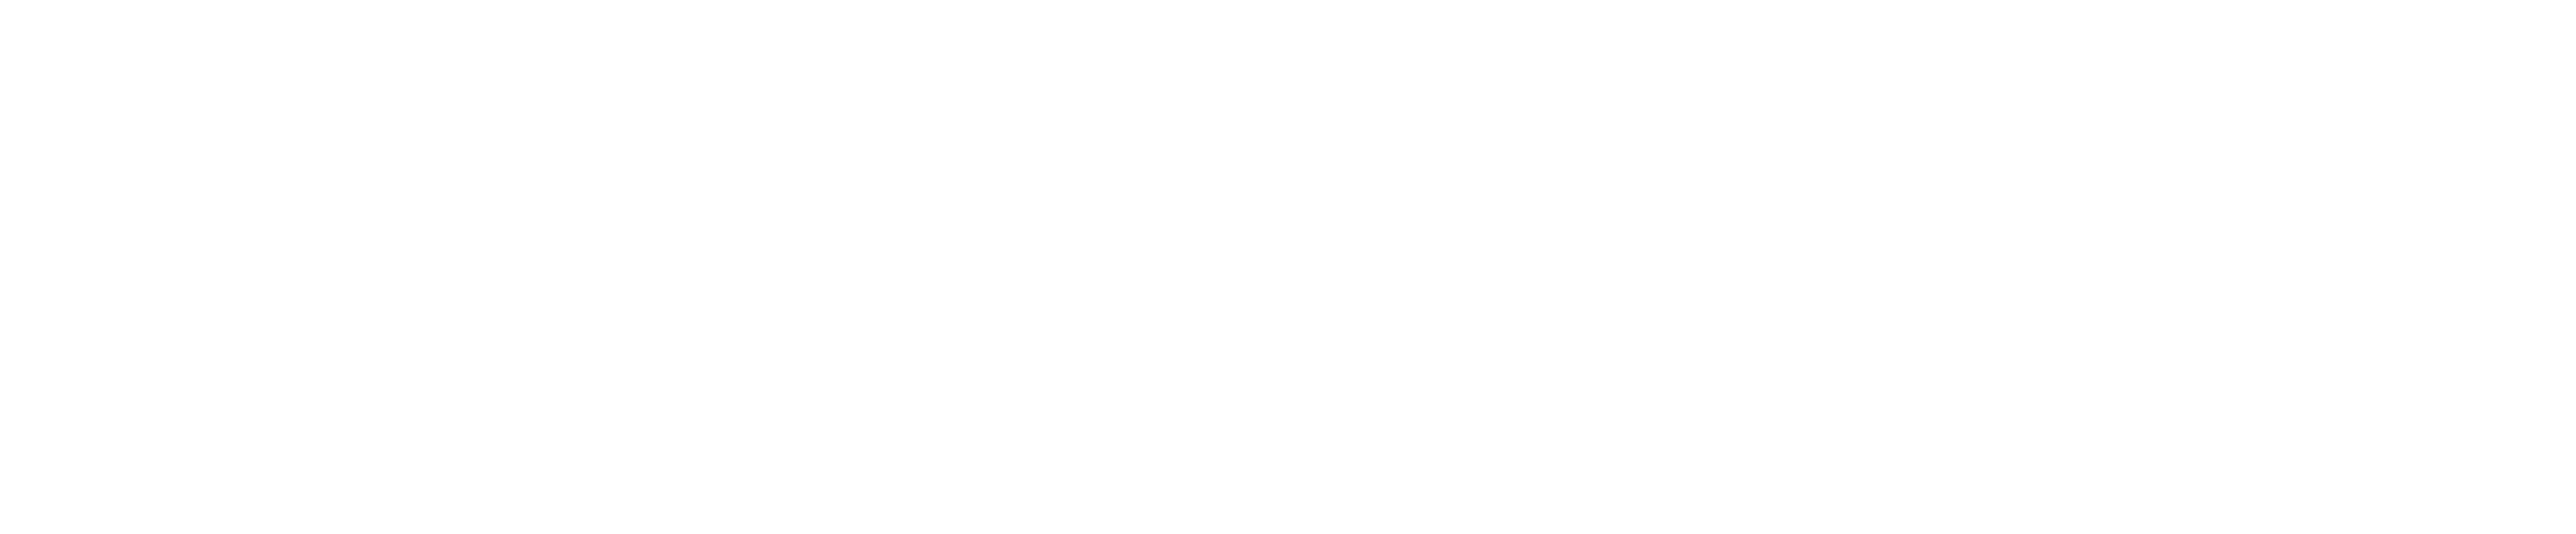 Fair Havens Camp & Conference Centre